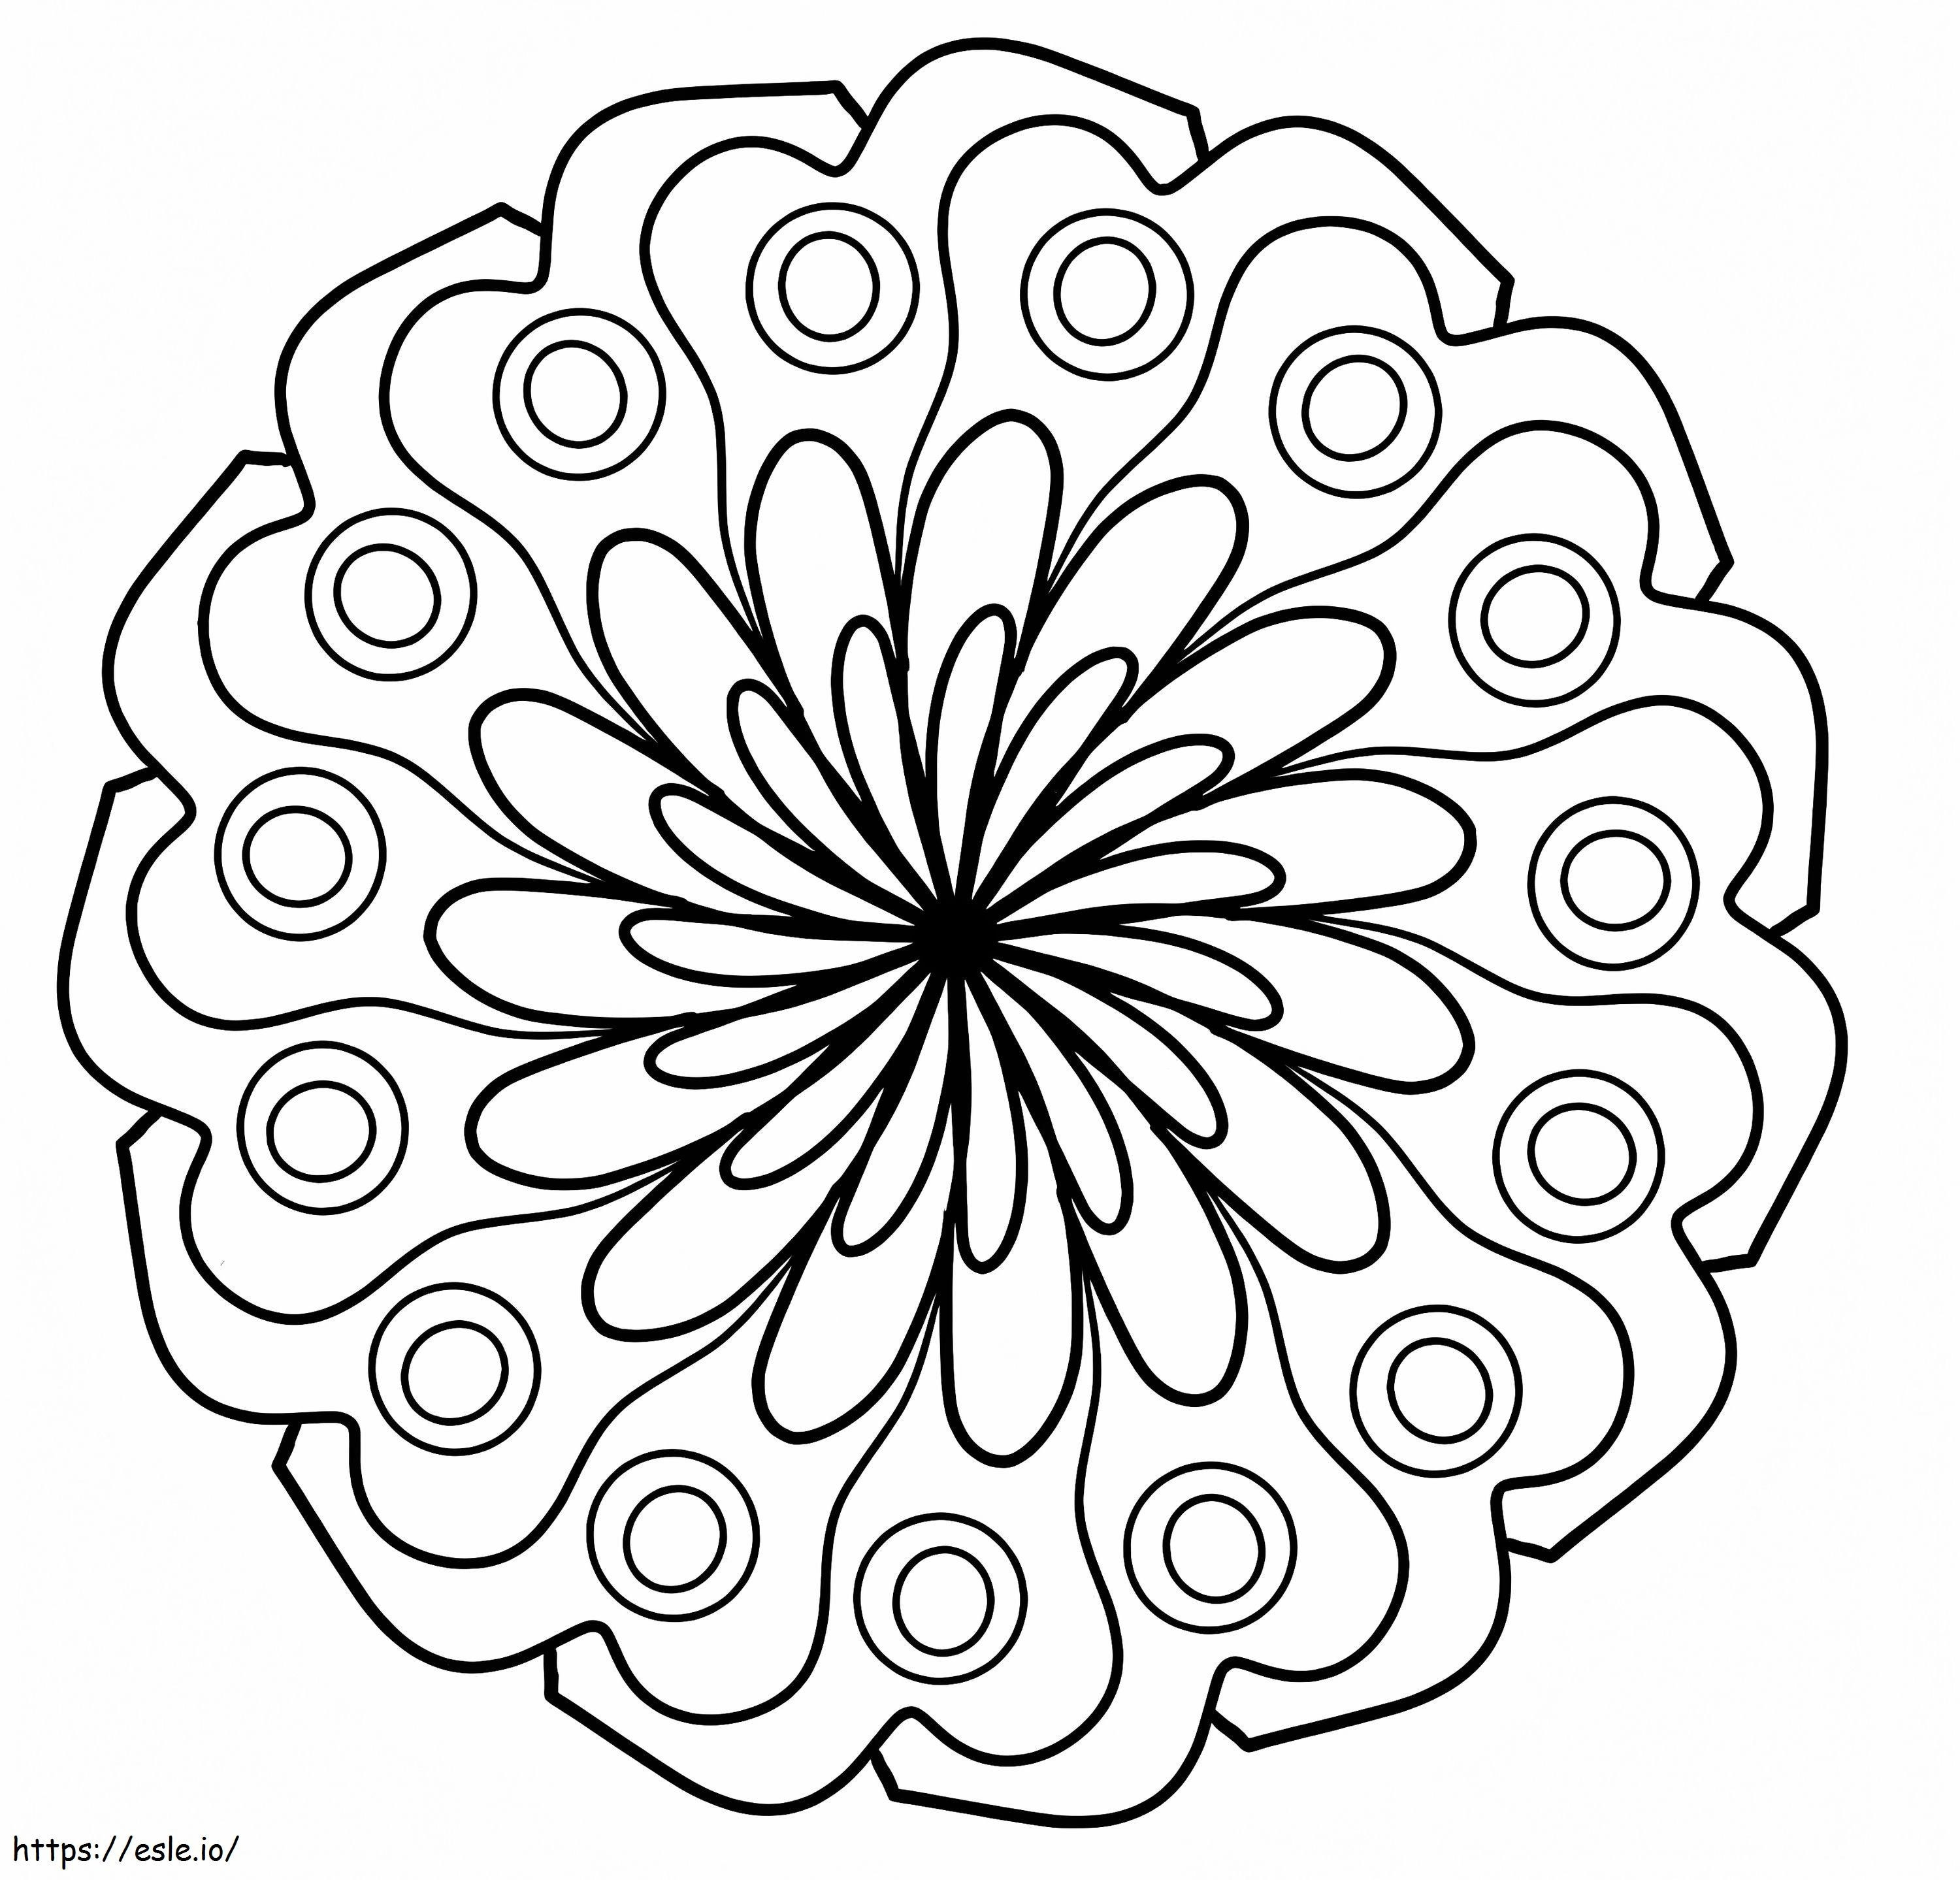 Simple Flower Mandala coloring page